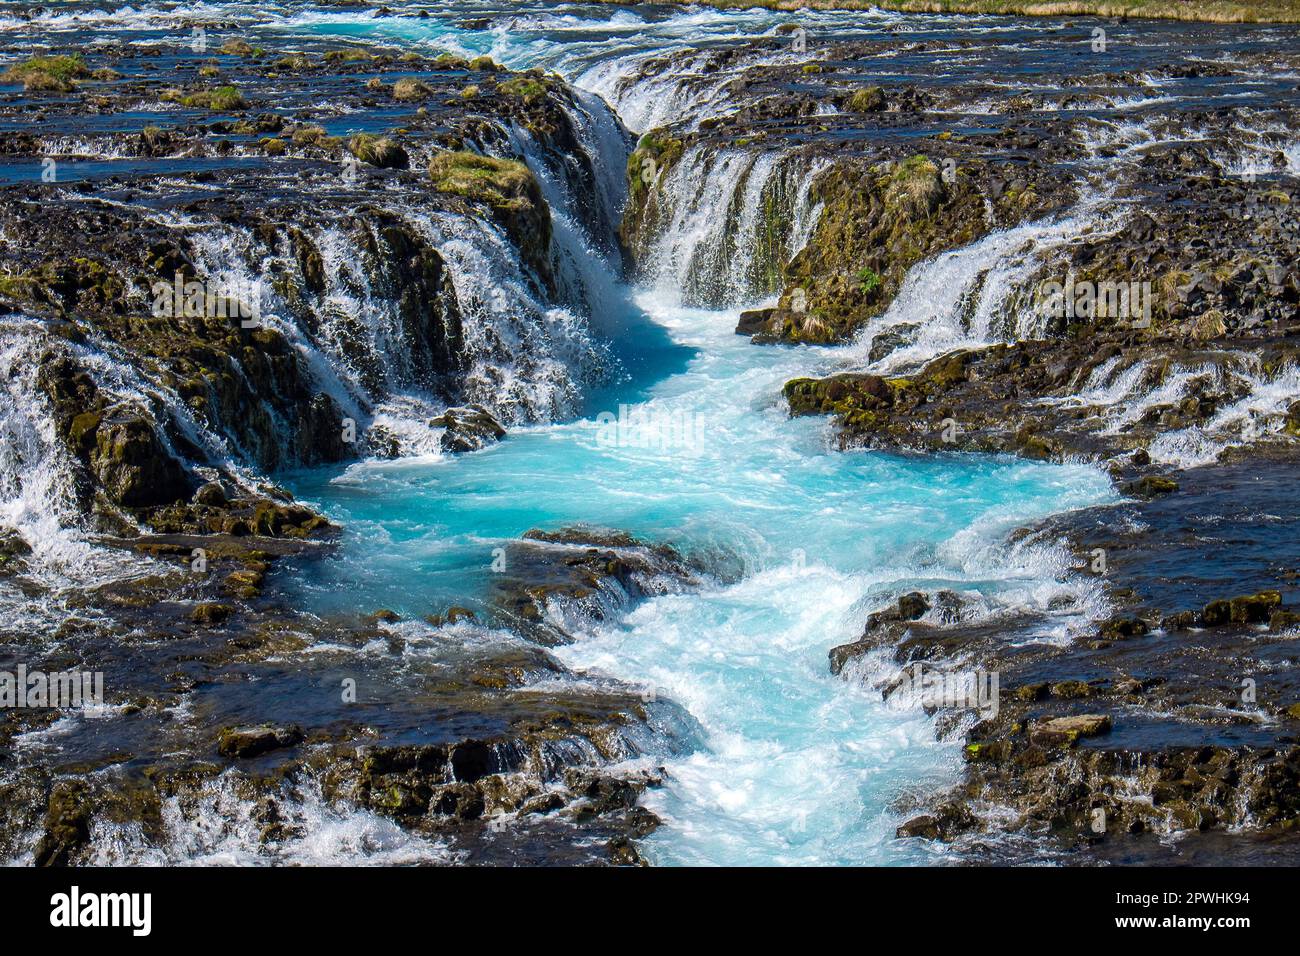 La magnifique cascade de Bruarfoss en Islande Banque D'Images